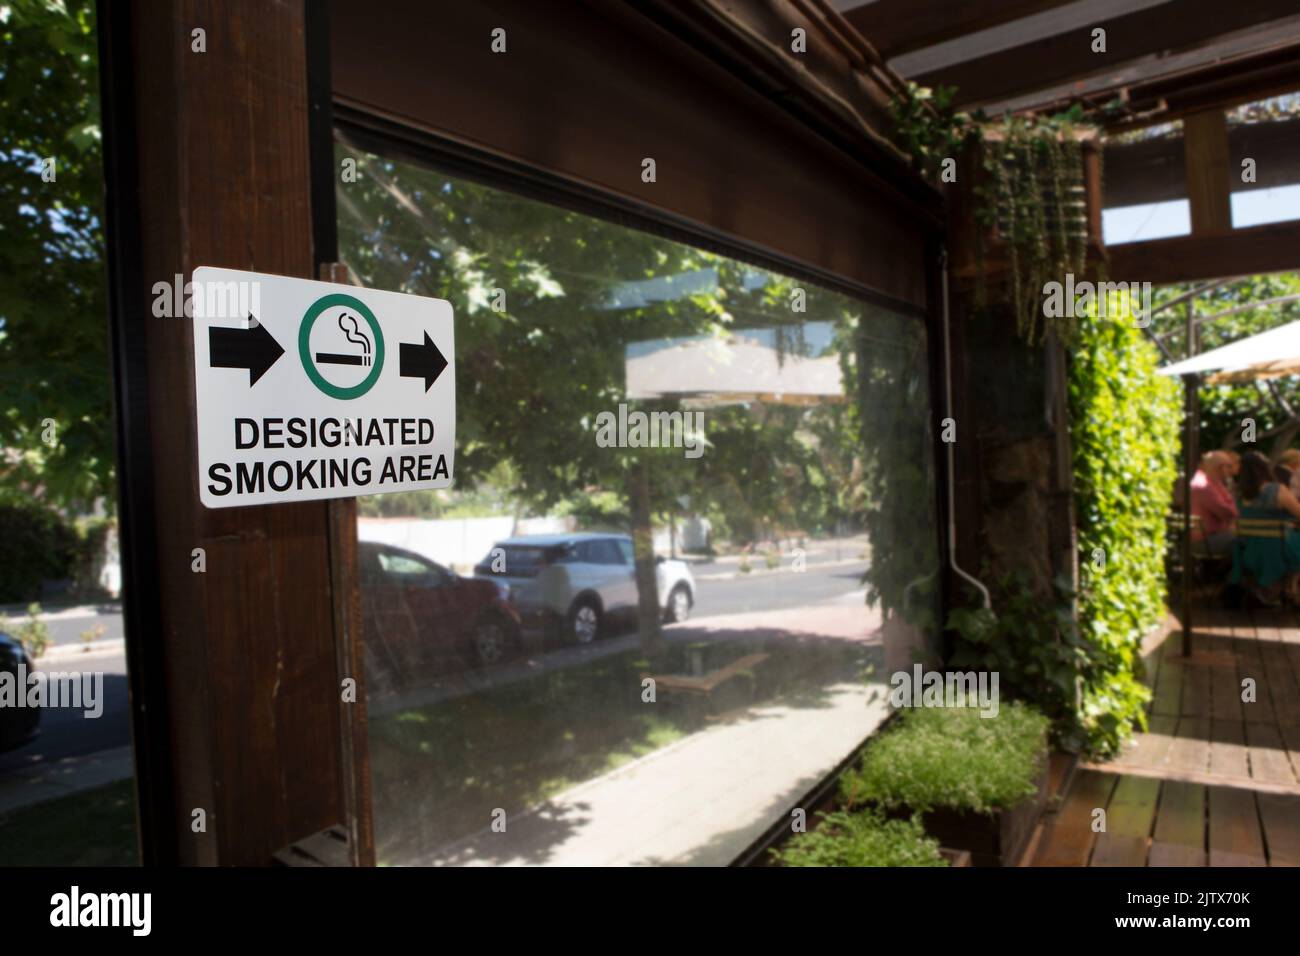 Designated smoking area sign pointing to open garden area. Hotel smoking policies concept. Stock Photo